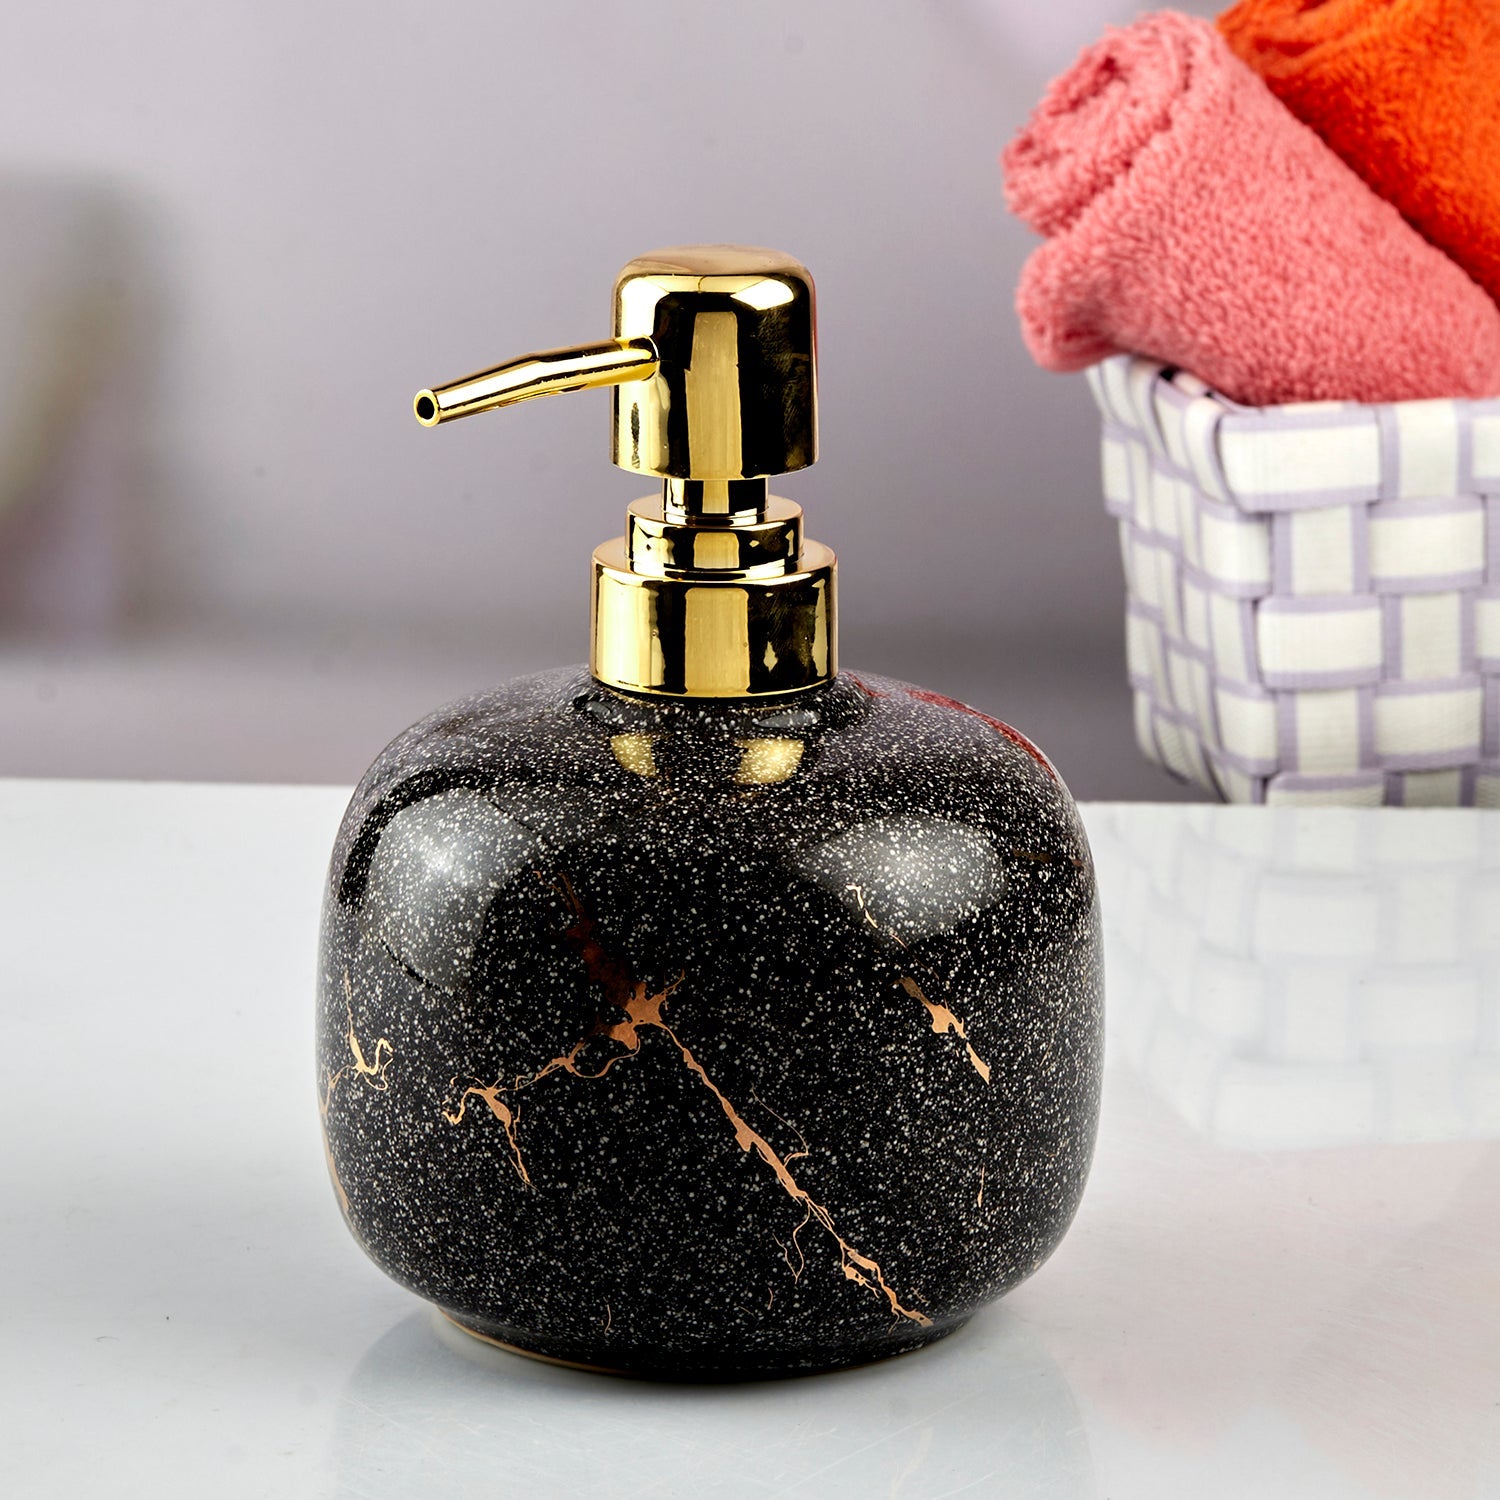 Ceramic Soap Dispenser liquid handwash pump for Bathroom, Set of 1, Black (10603)